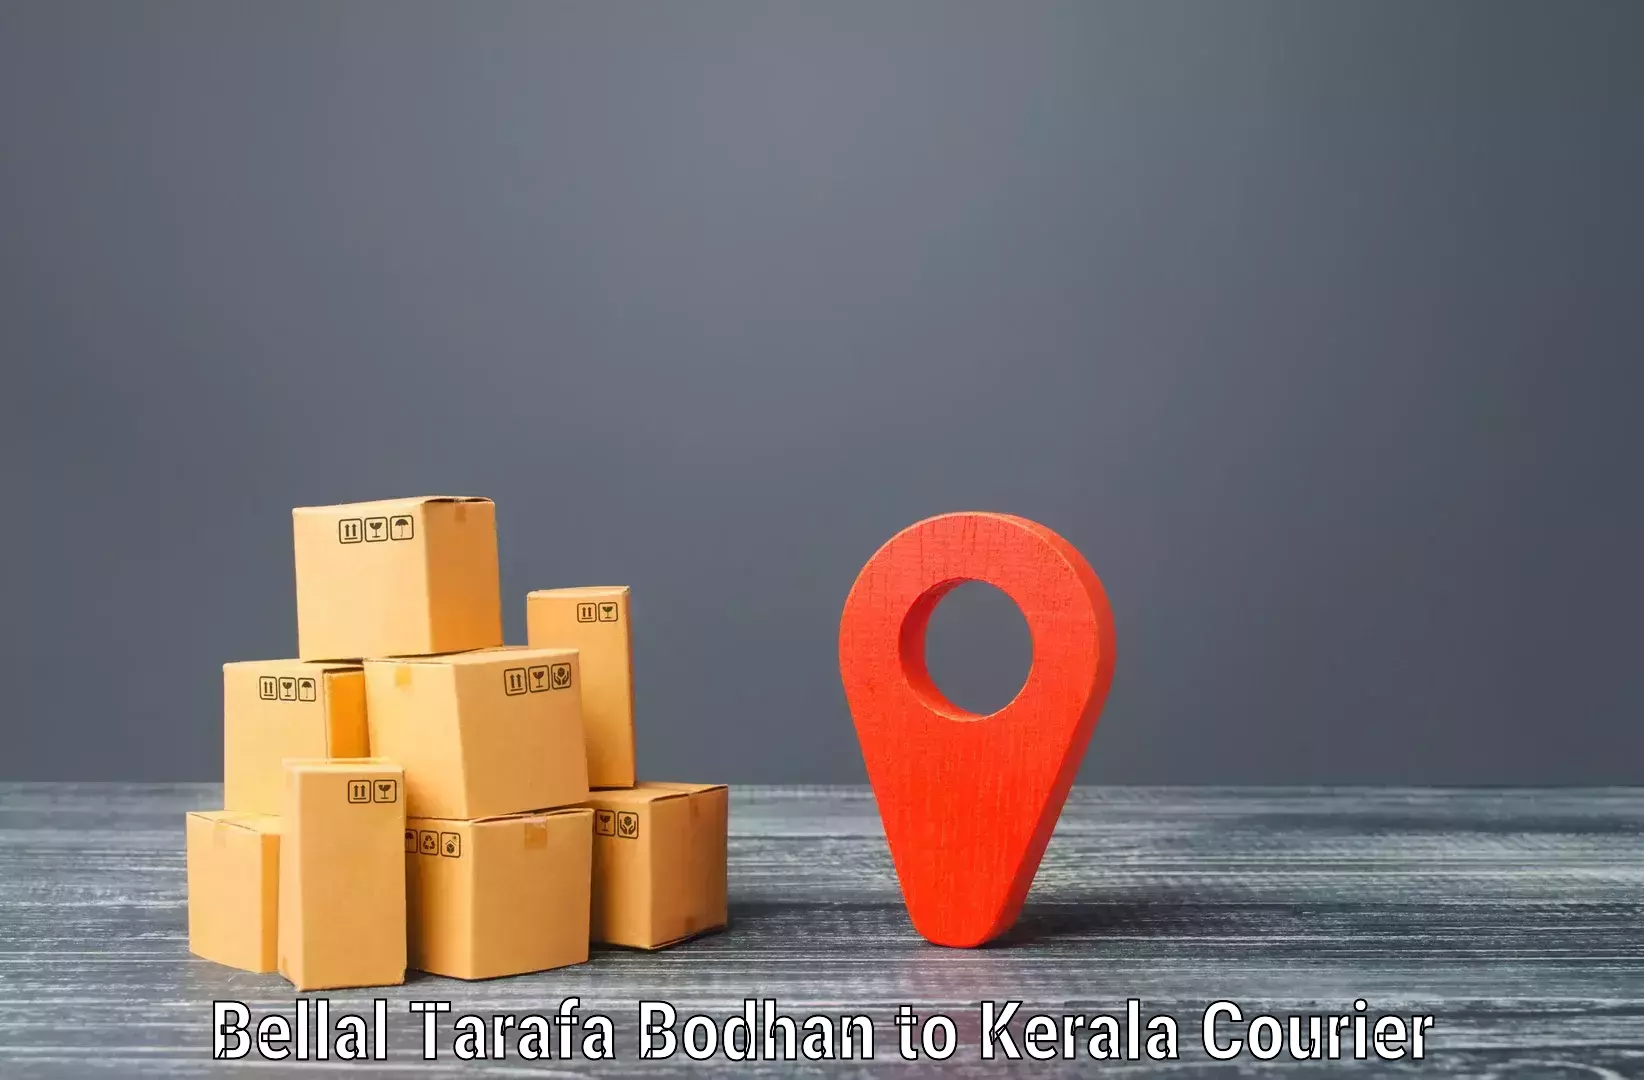 Automated parcel services Bellal Tarafa Bodhan to Mahe